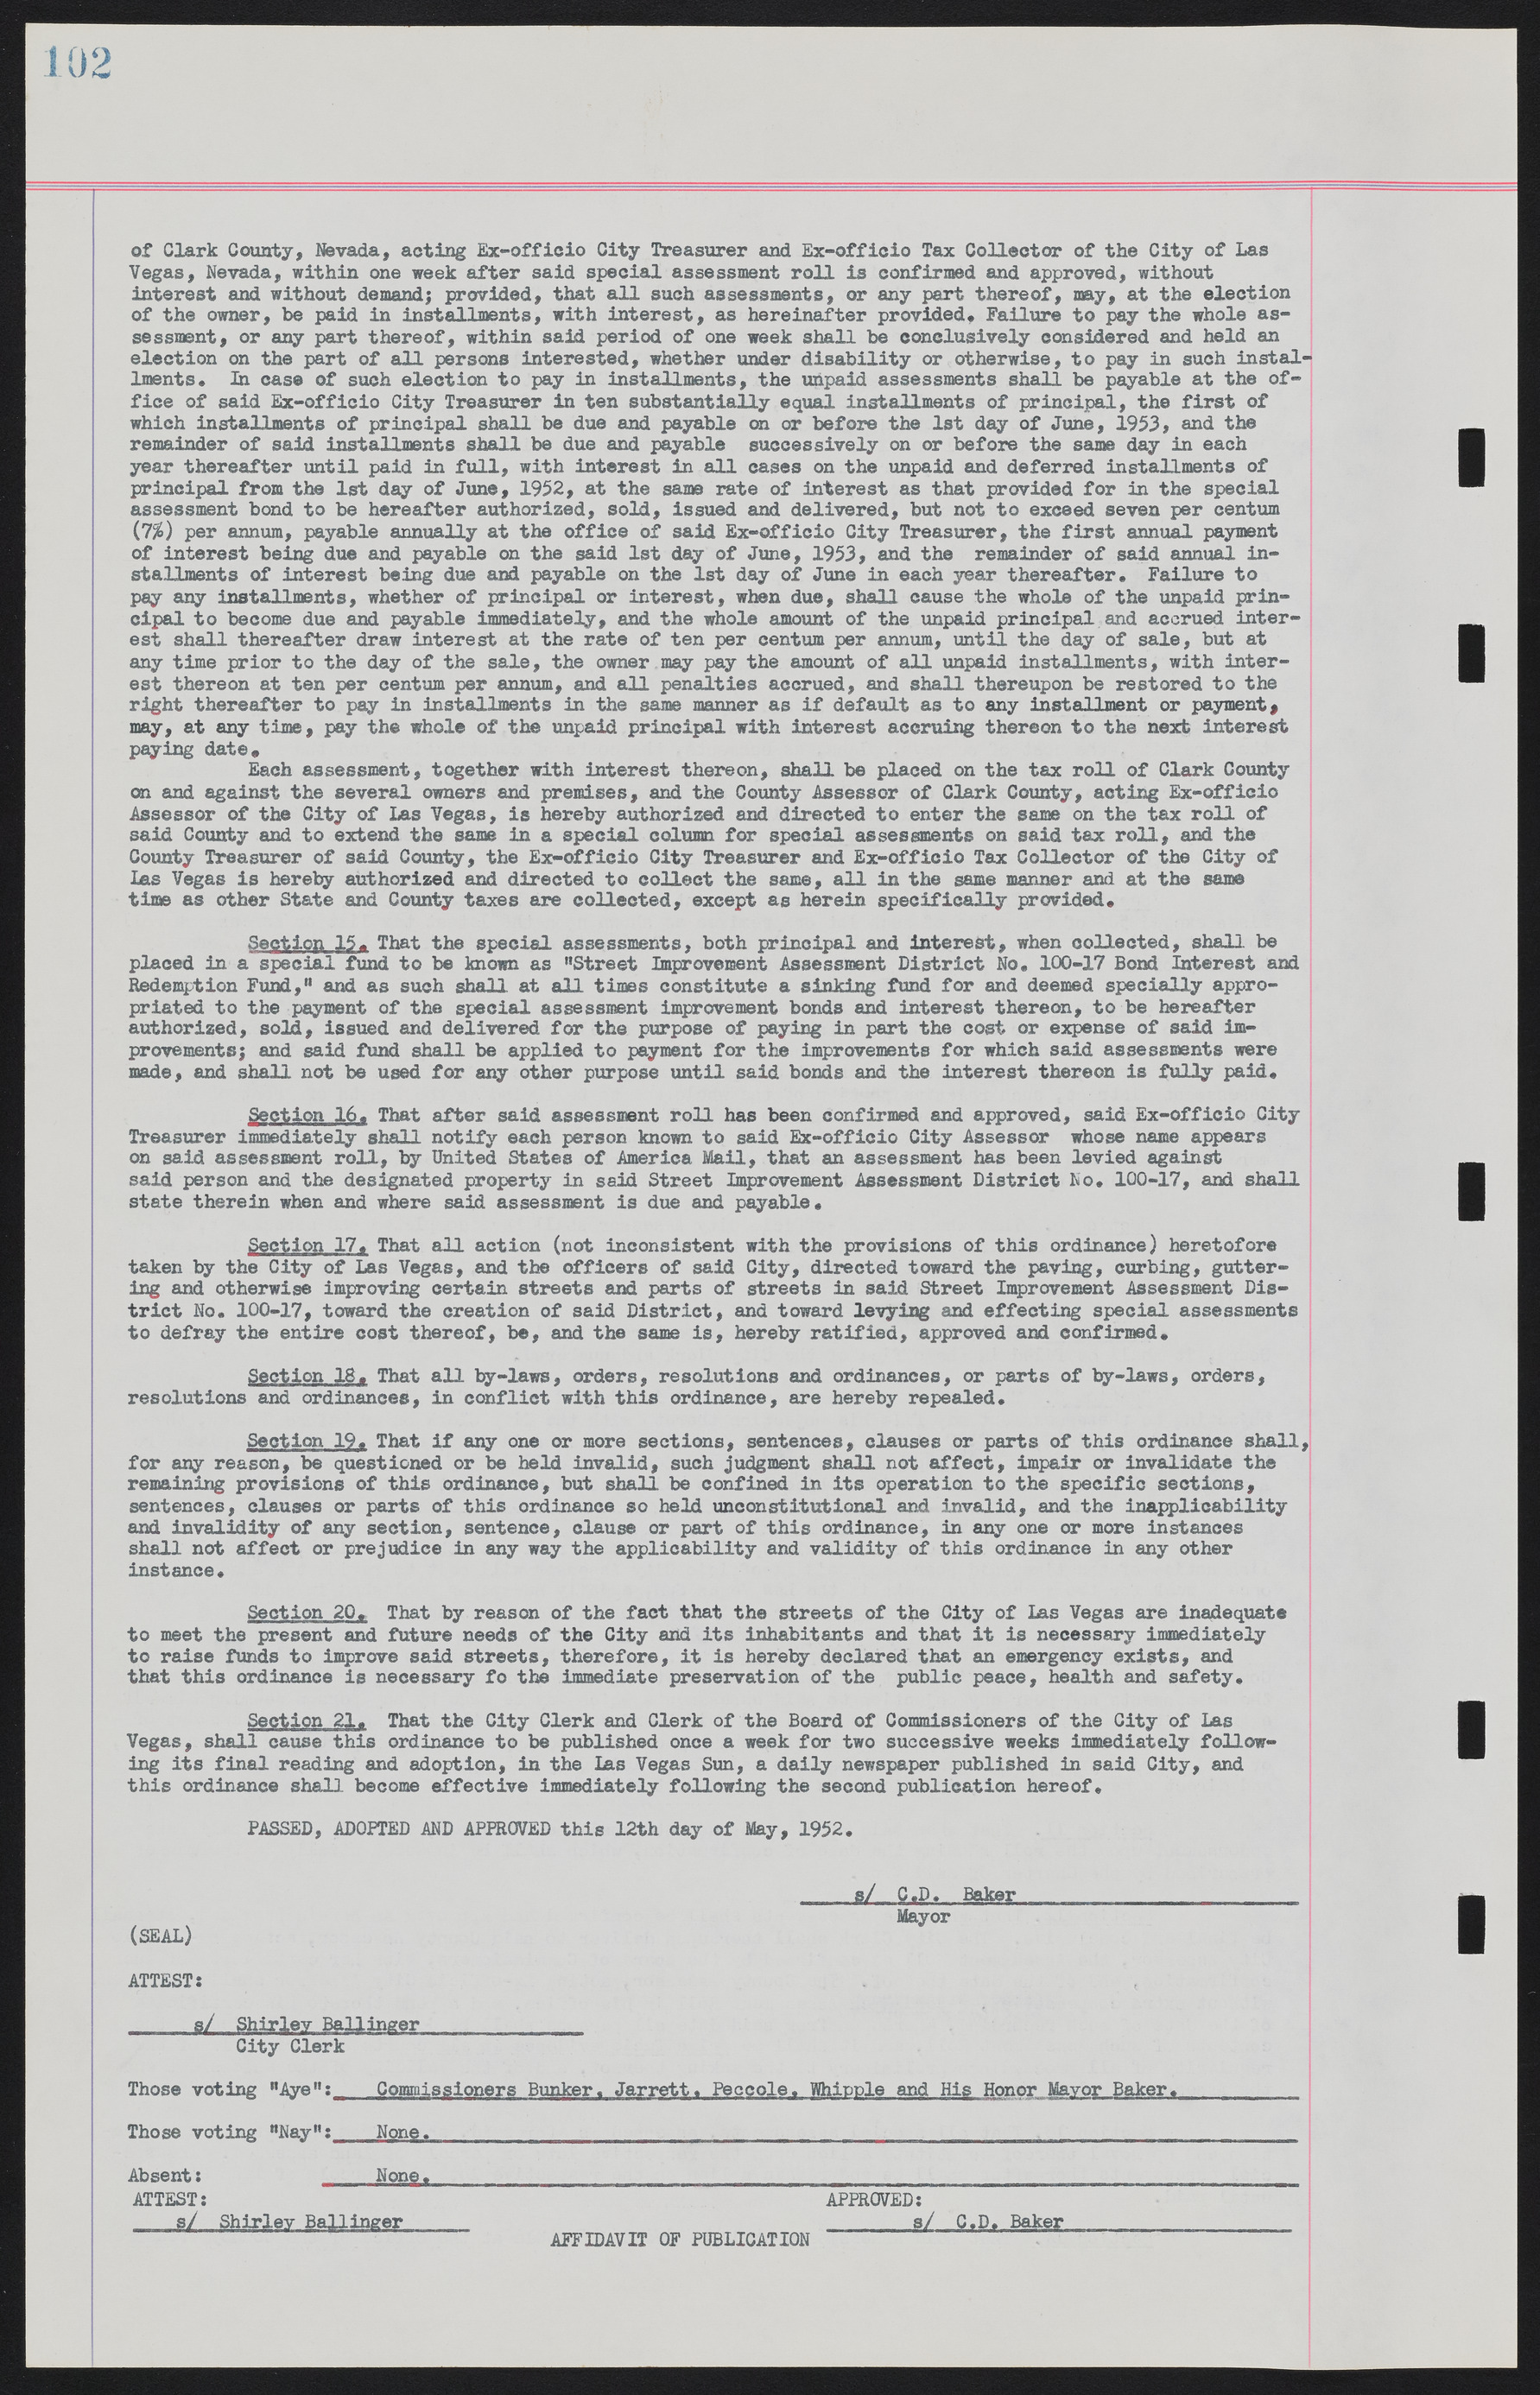 Las Vegas City Ordinances, November 13, 1950 to August 6, 1958, lvc000015-110